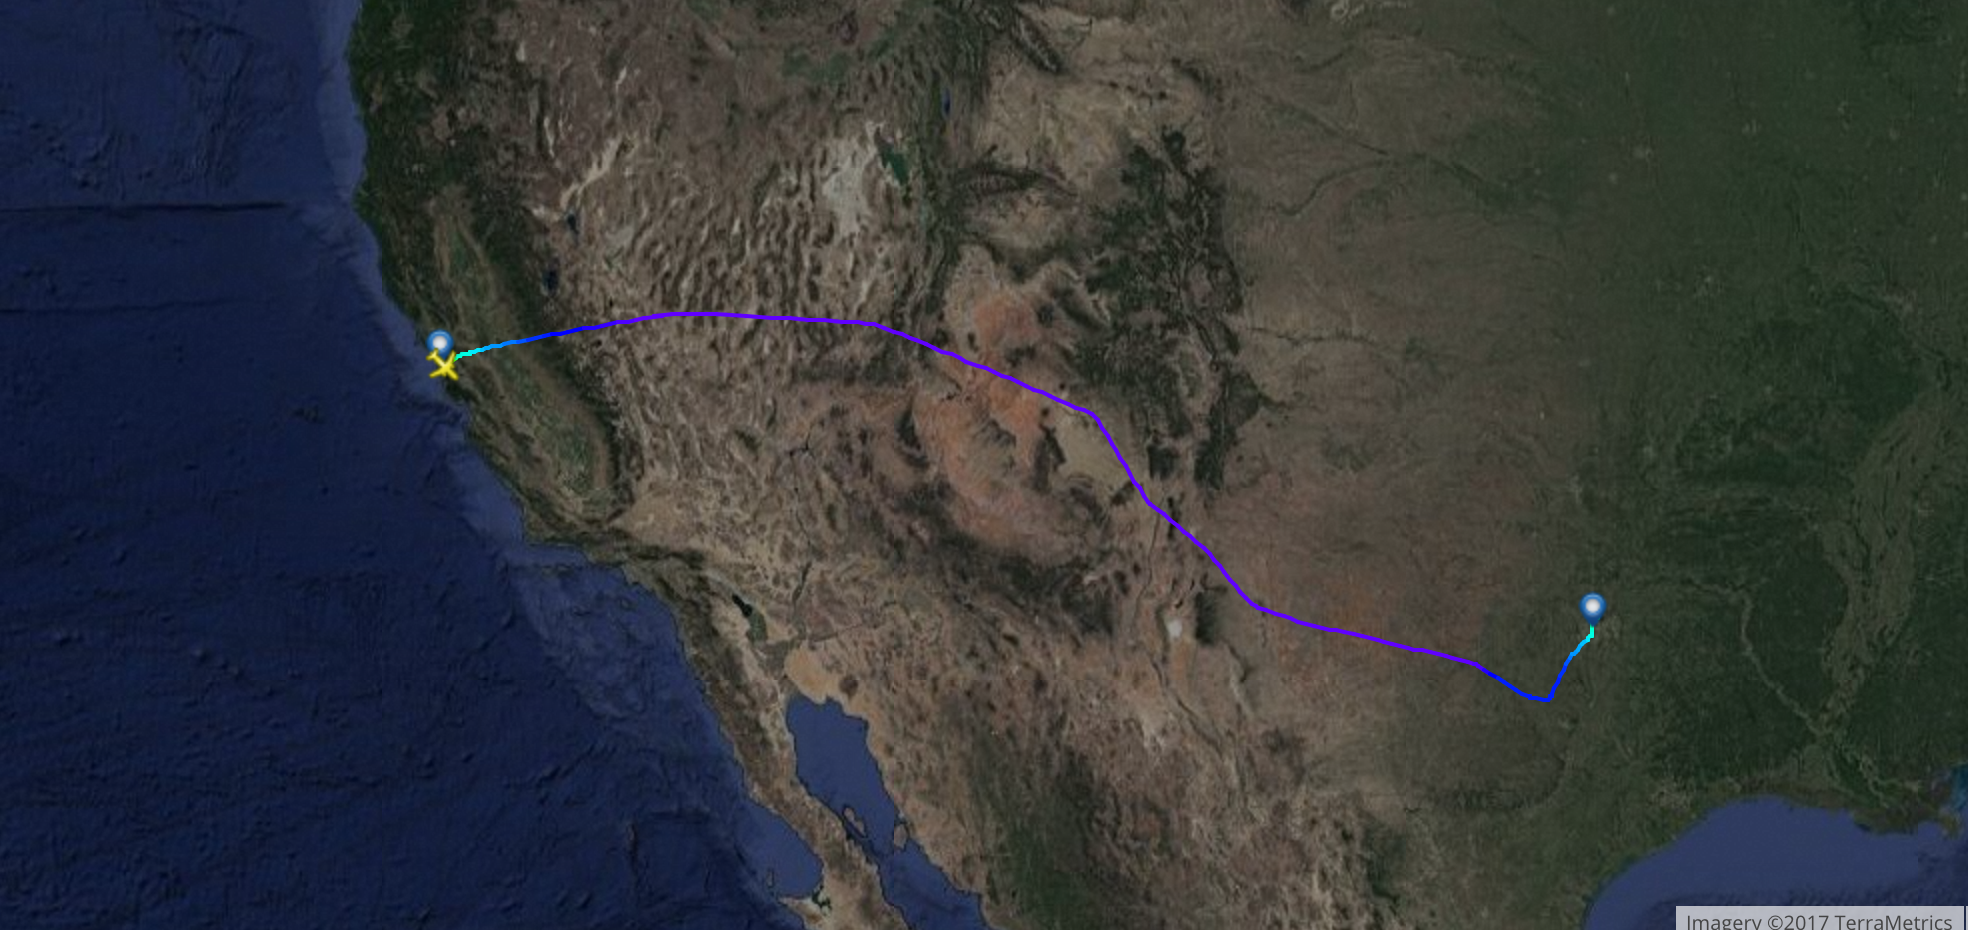 American Airlines flight 591 from San Francisco to Dallas (Image: FlightRadar24)